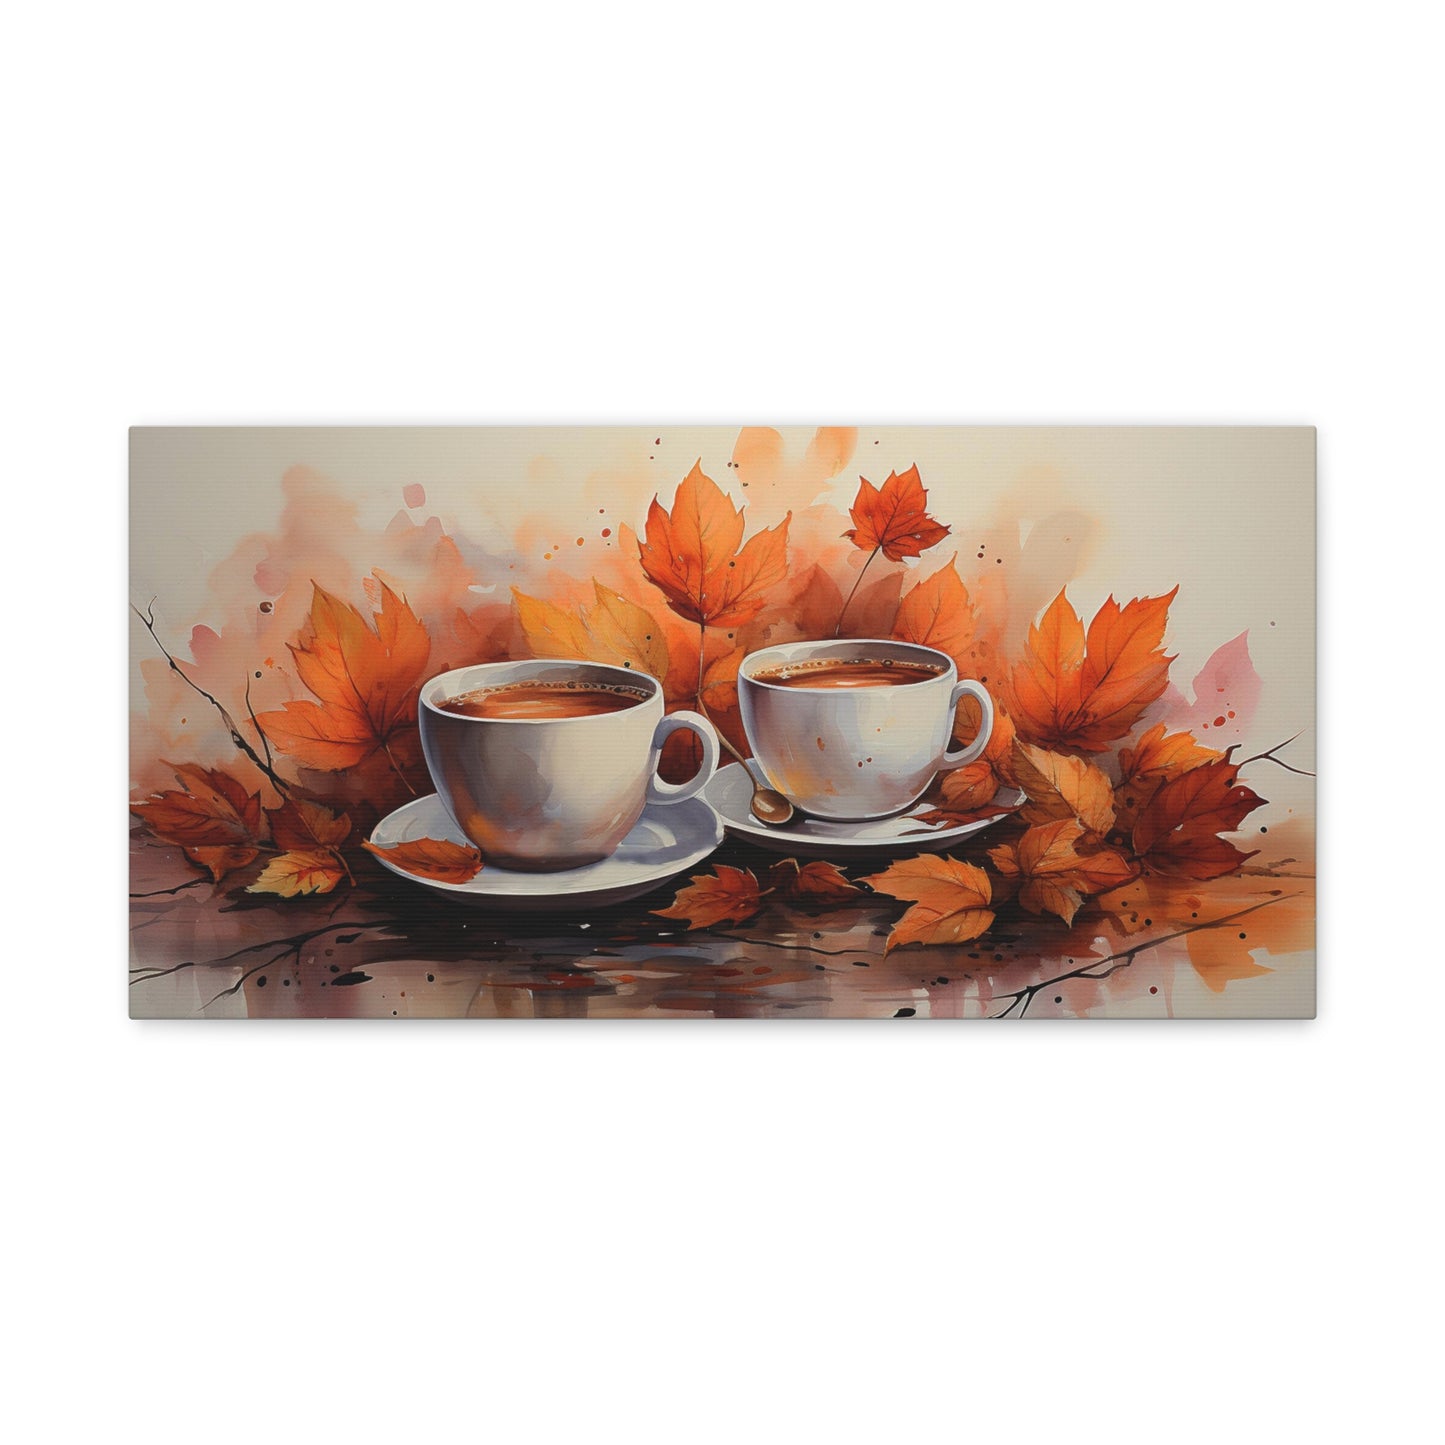 Café Due | Autumn Coffee Wall Art Canvas | Rustic Fall Print | Watercolor Wall Art | Fall Decor